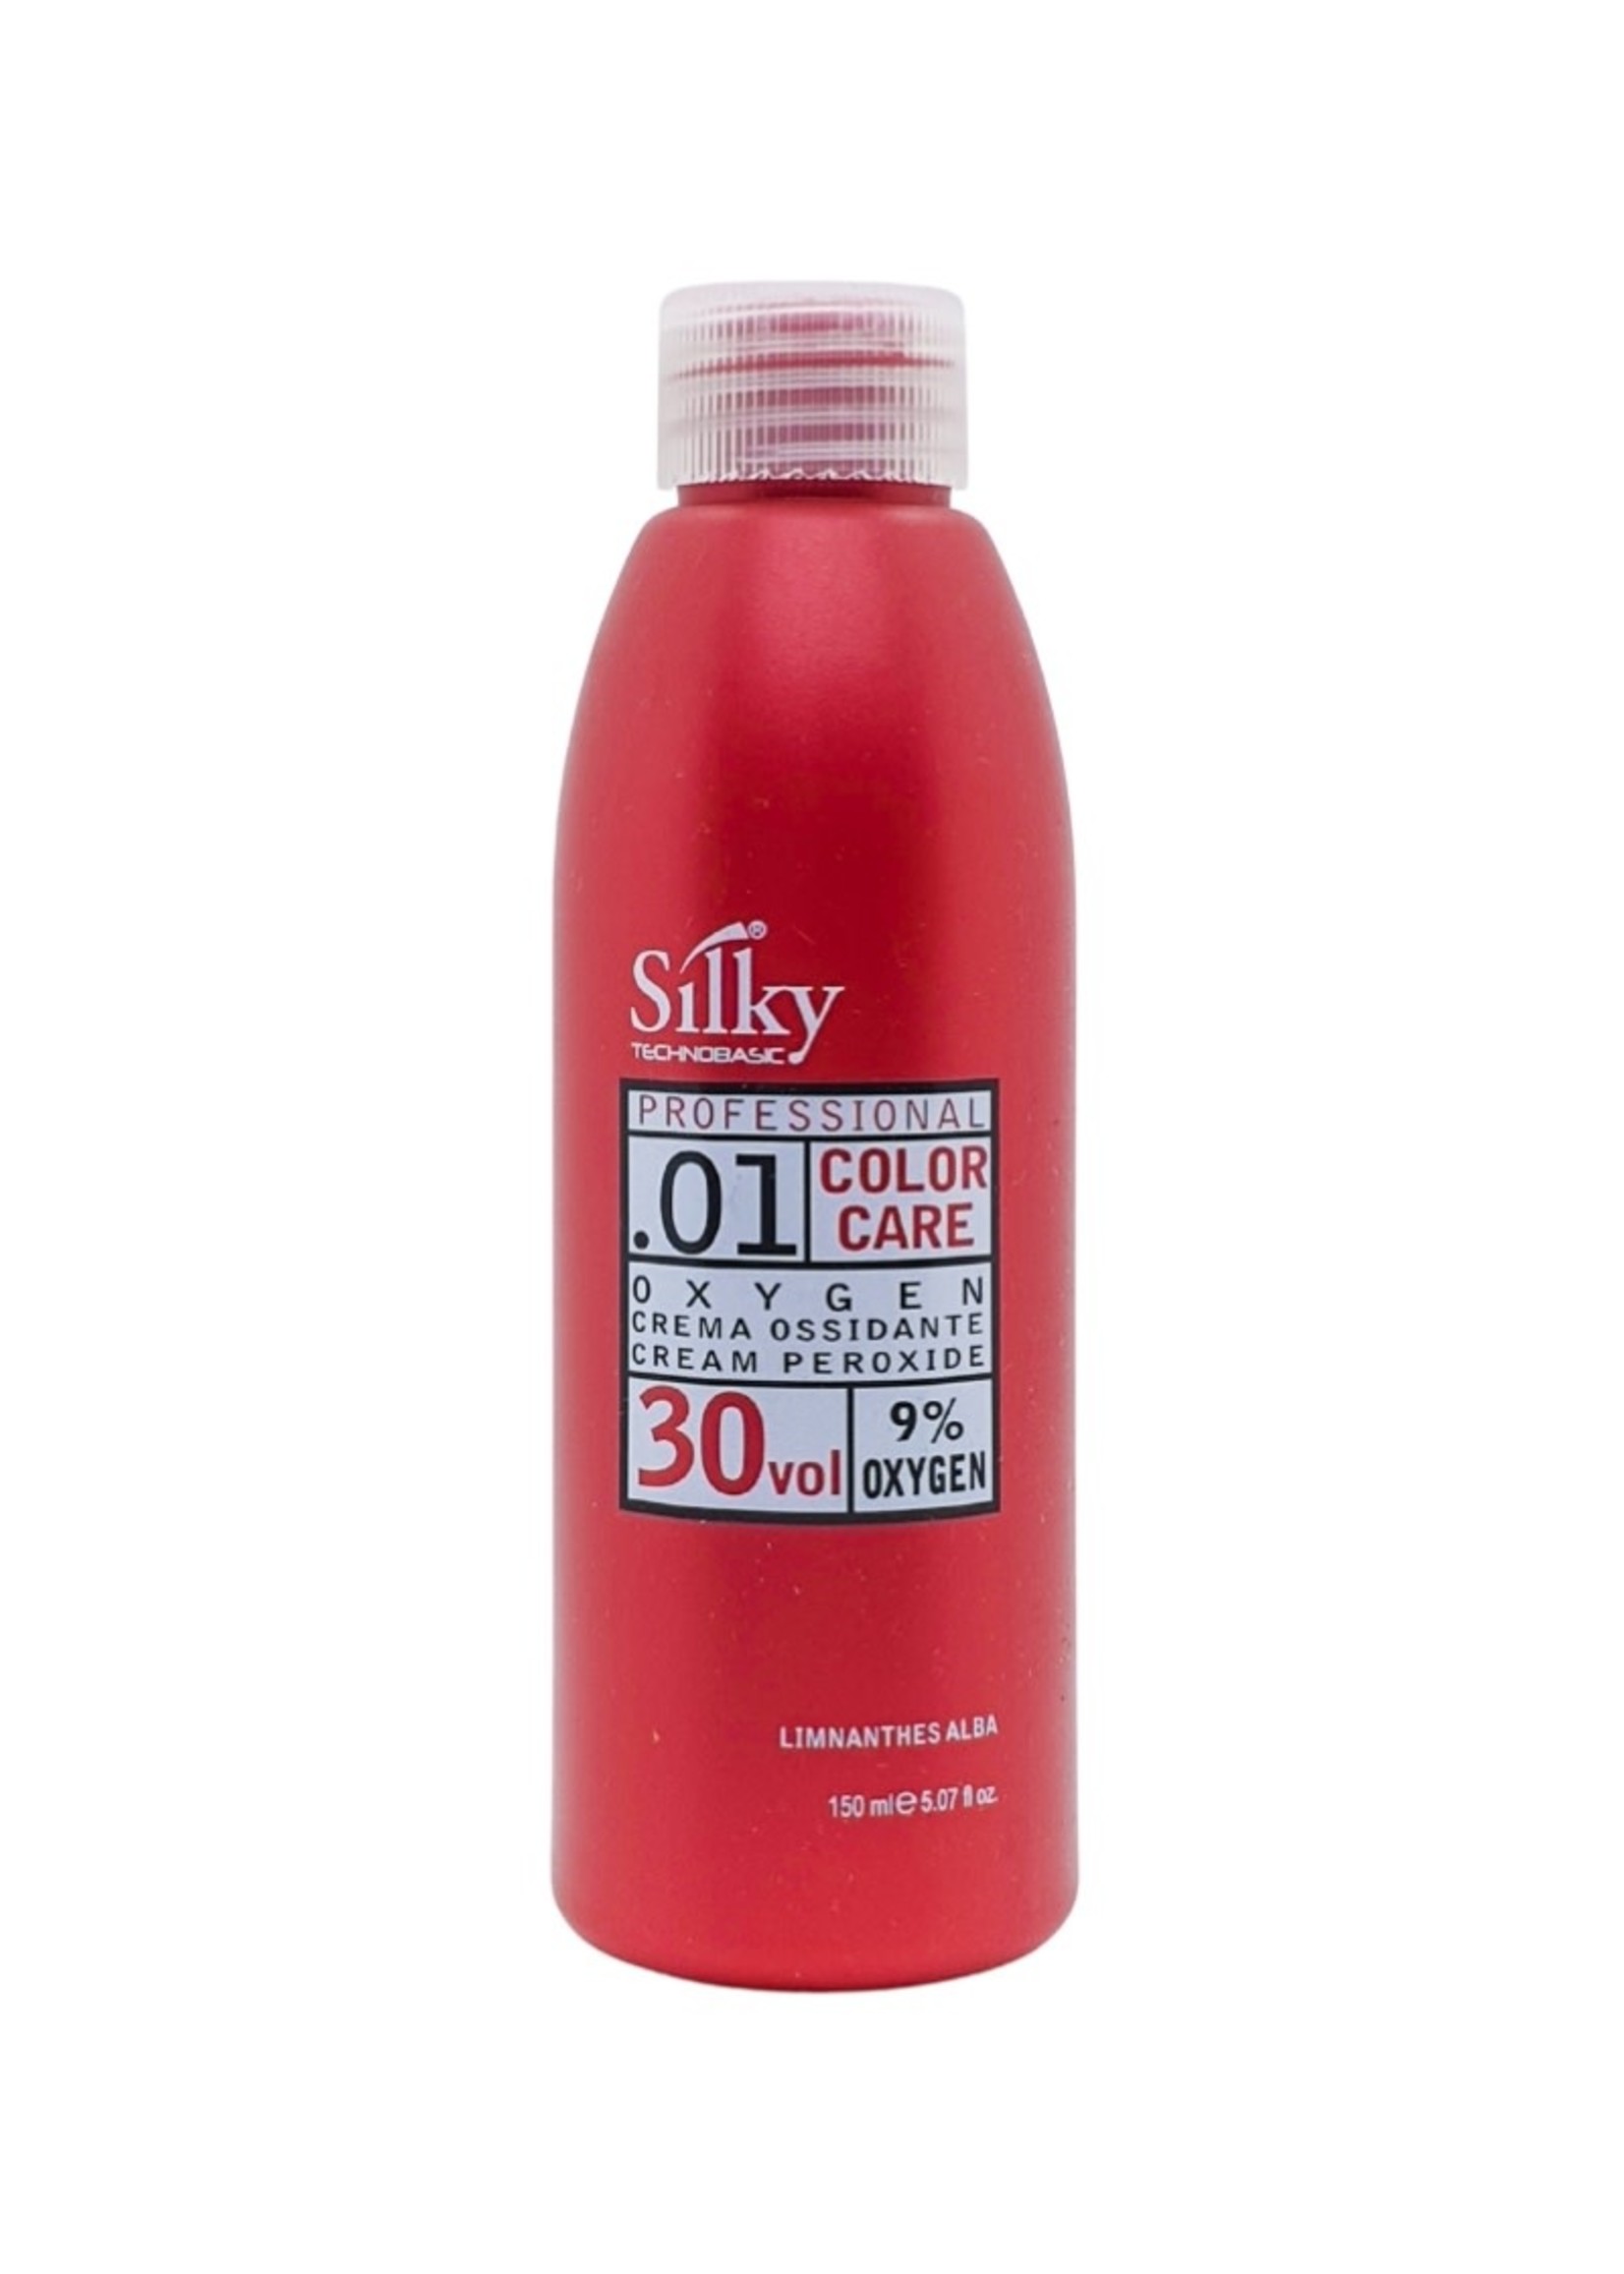 Silky Silky Cream Peroxide 30 Vol (9%) 150ml